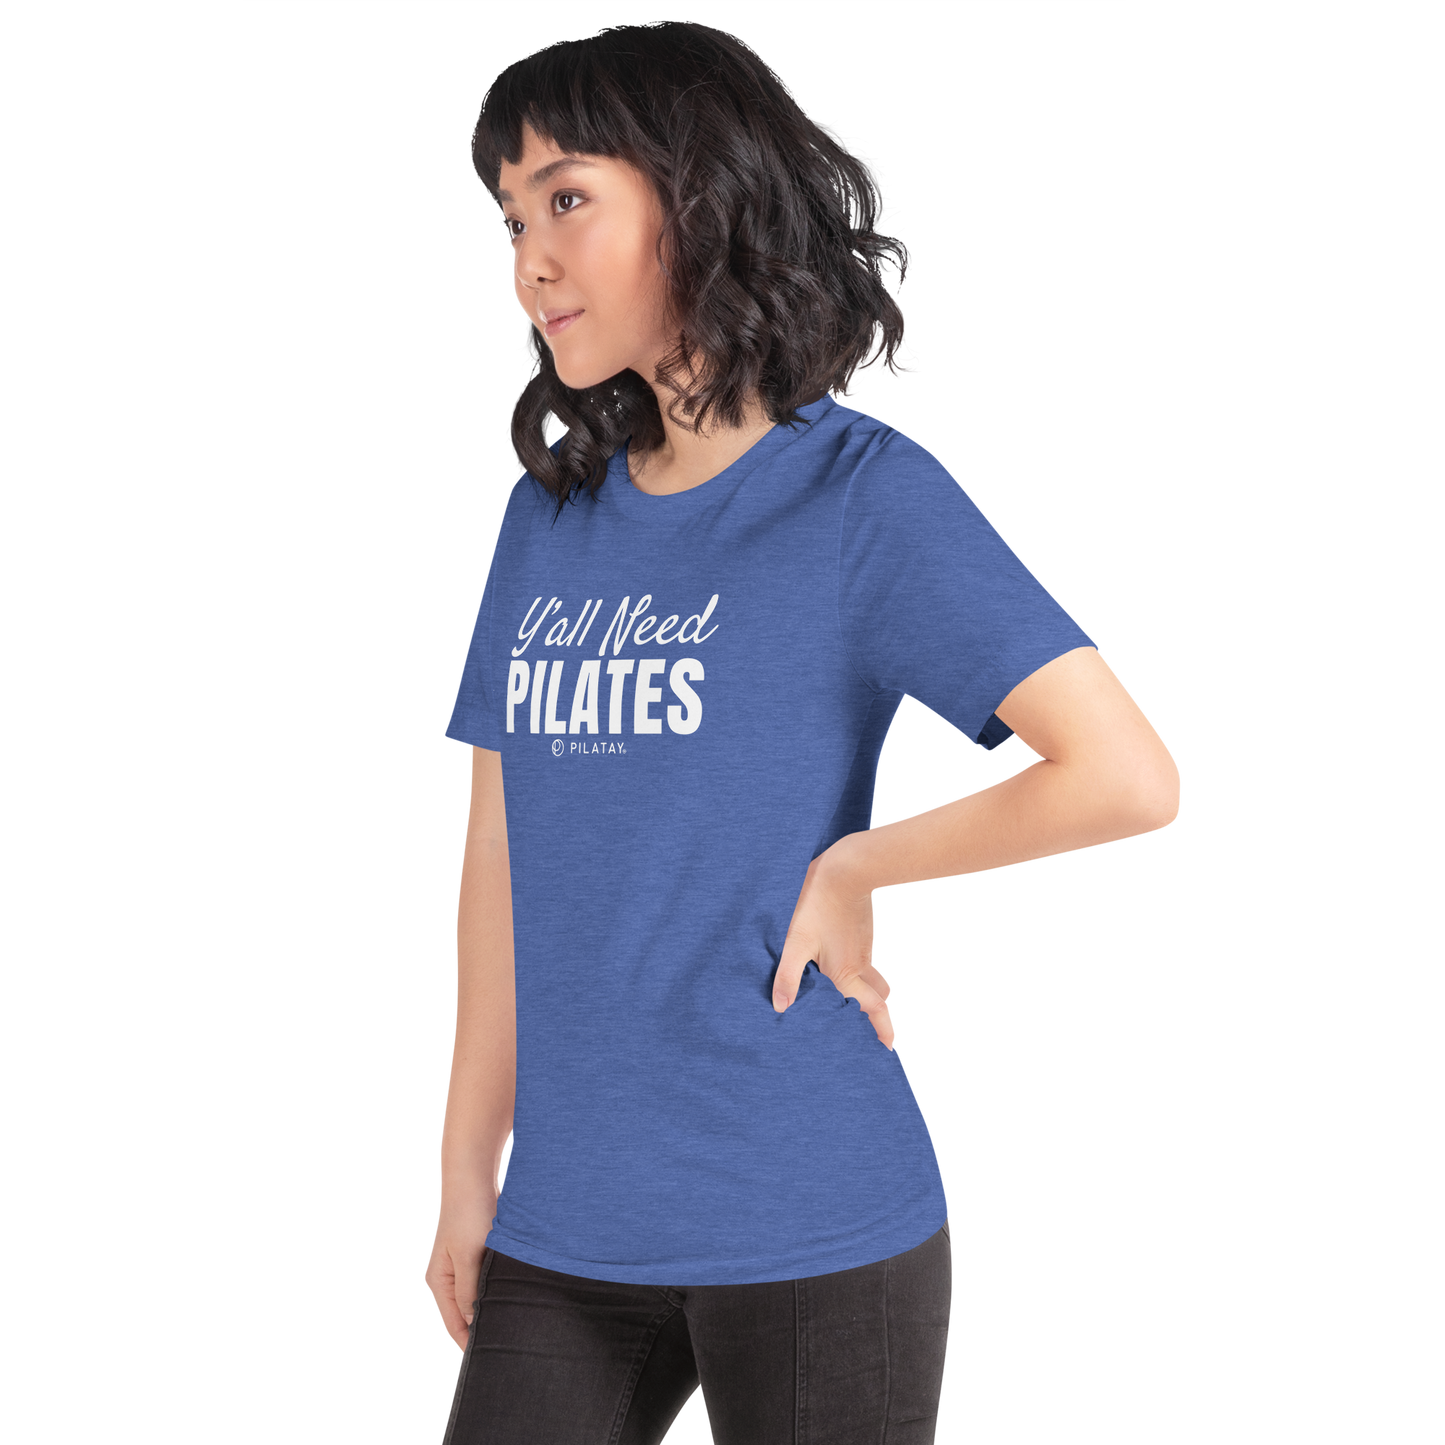 Y'all Need Pilates - Unisex T-Shirt